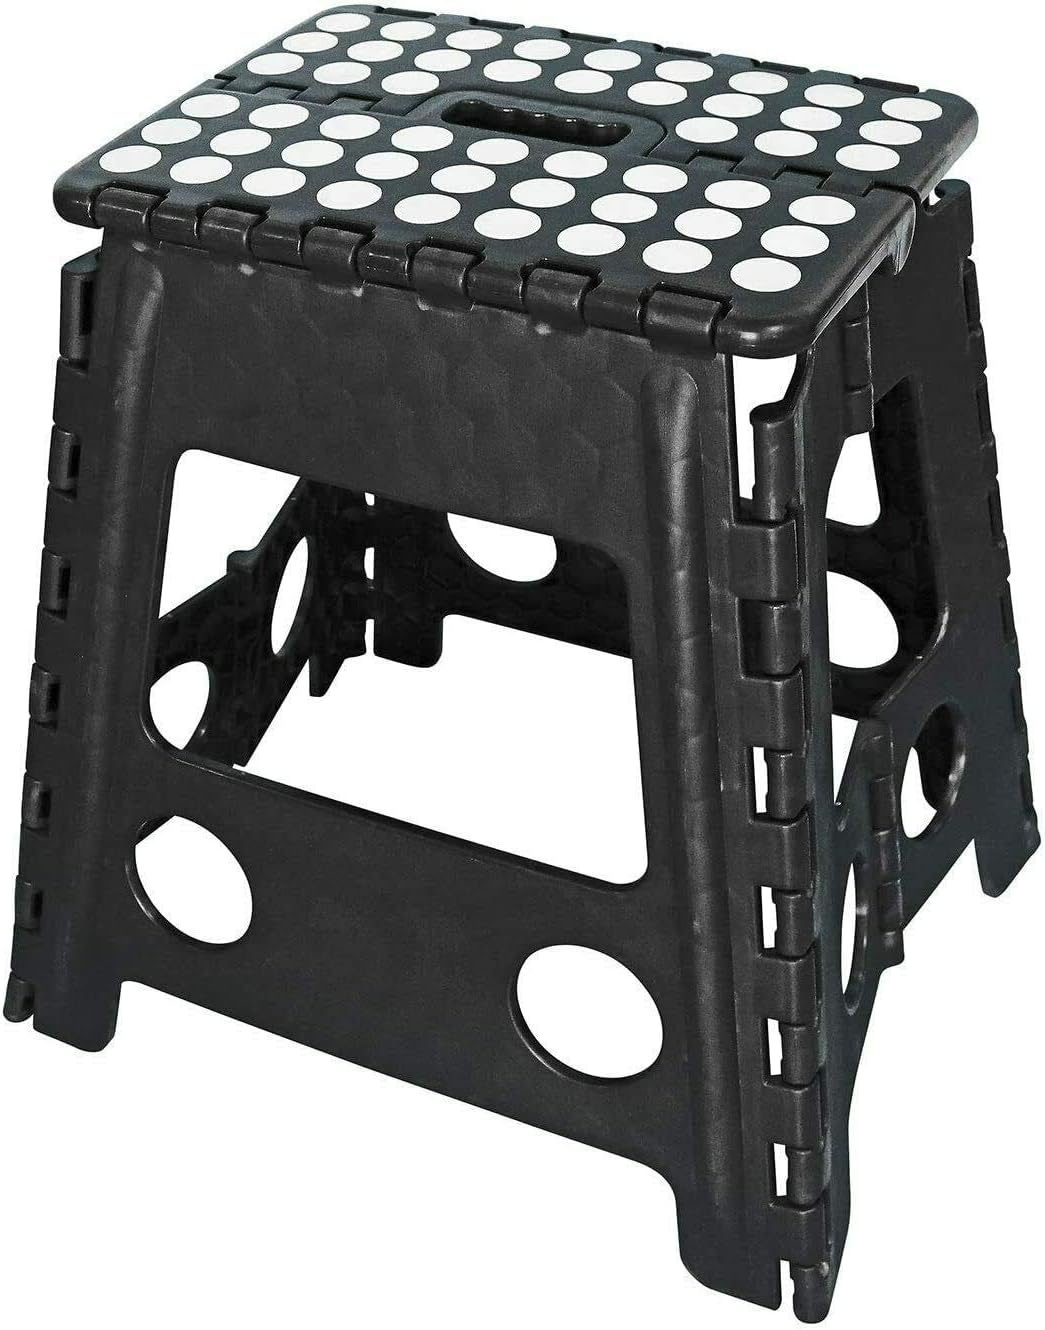 OZSTOCK Large Folding Step Ladder